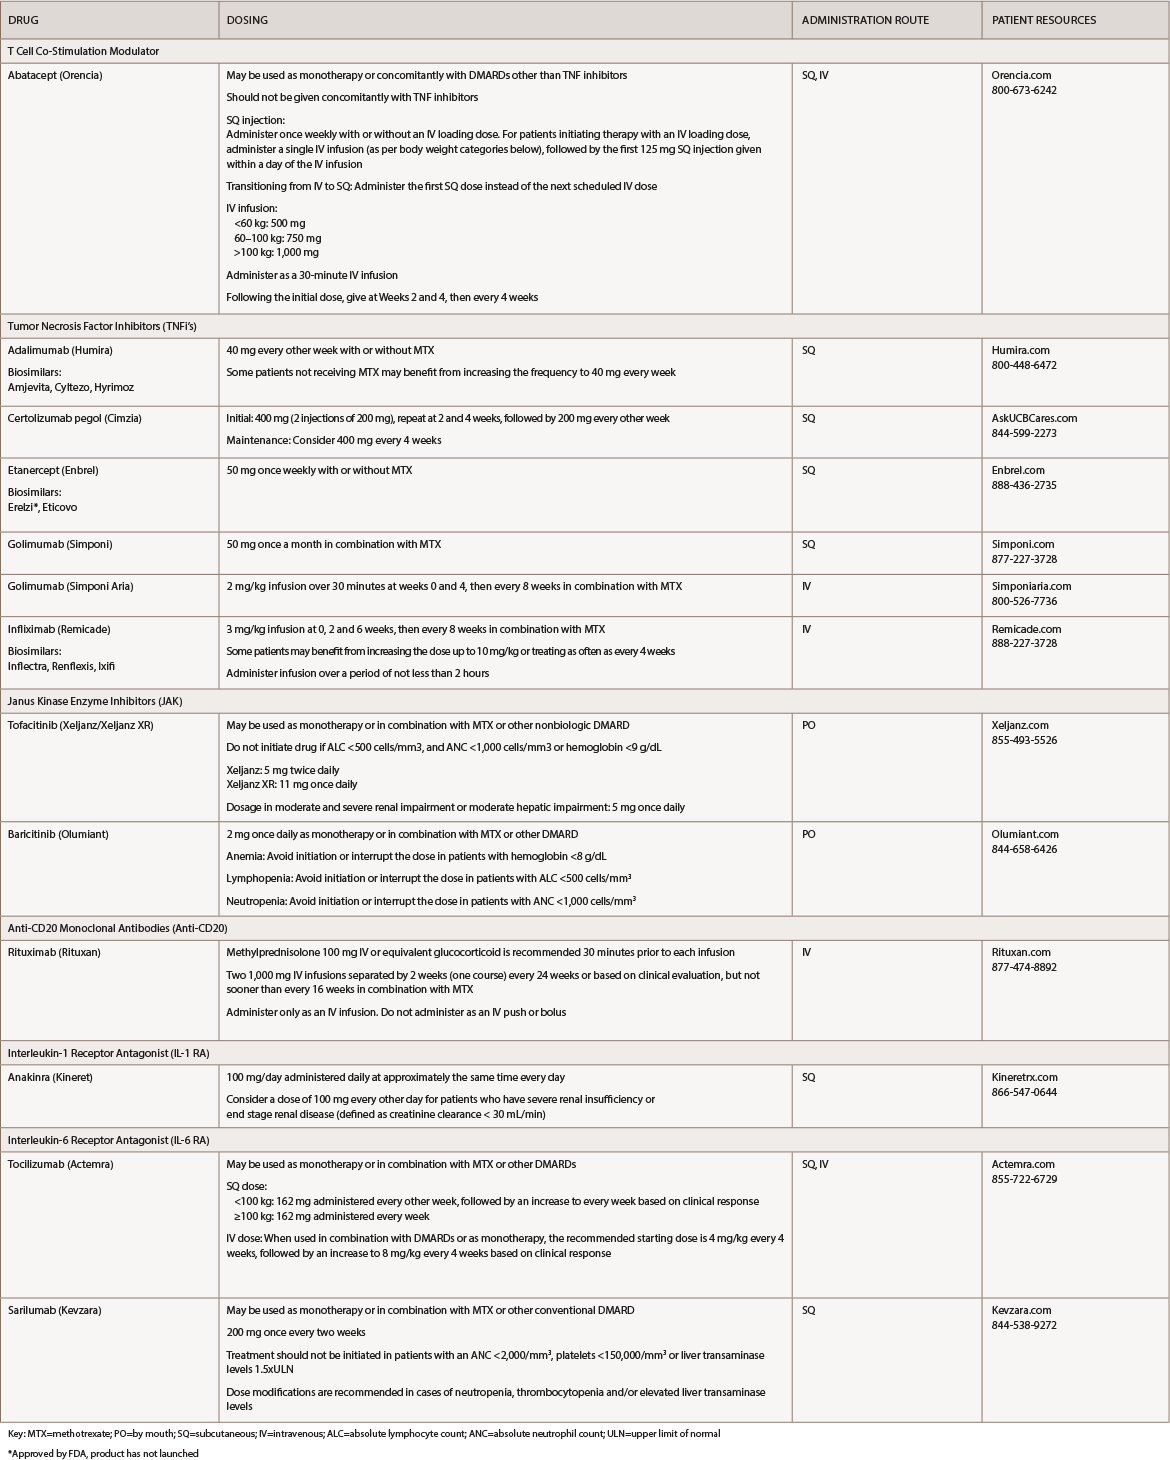 Table 1: Rheumatoid Arthritis Medications at a Glance